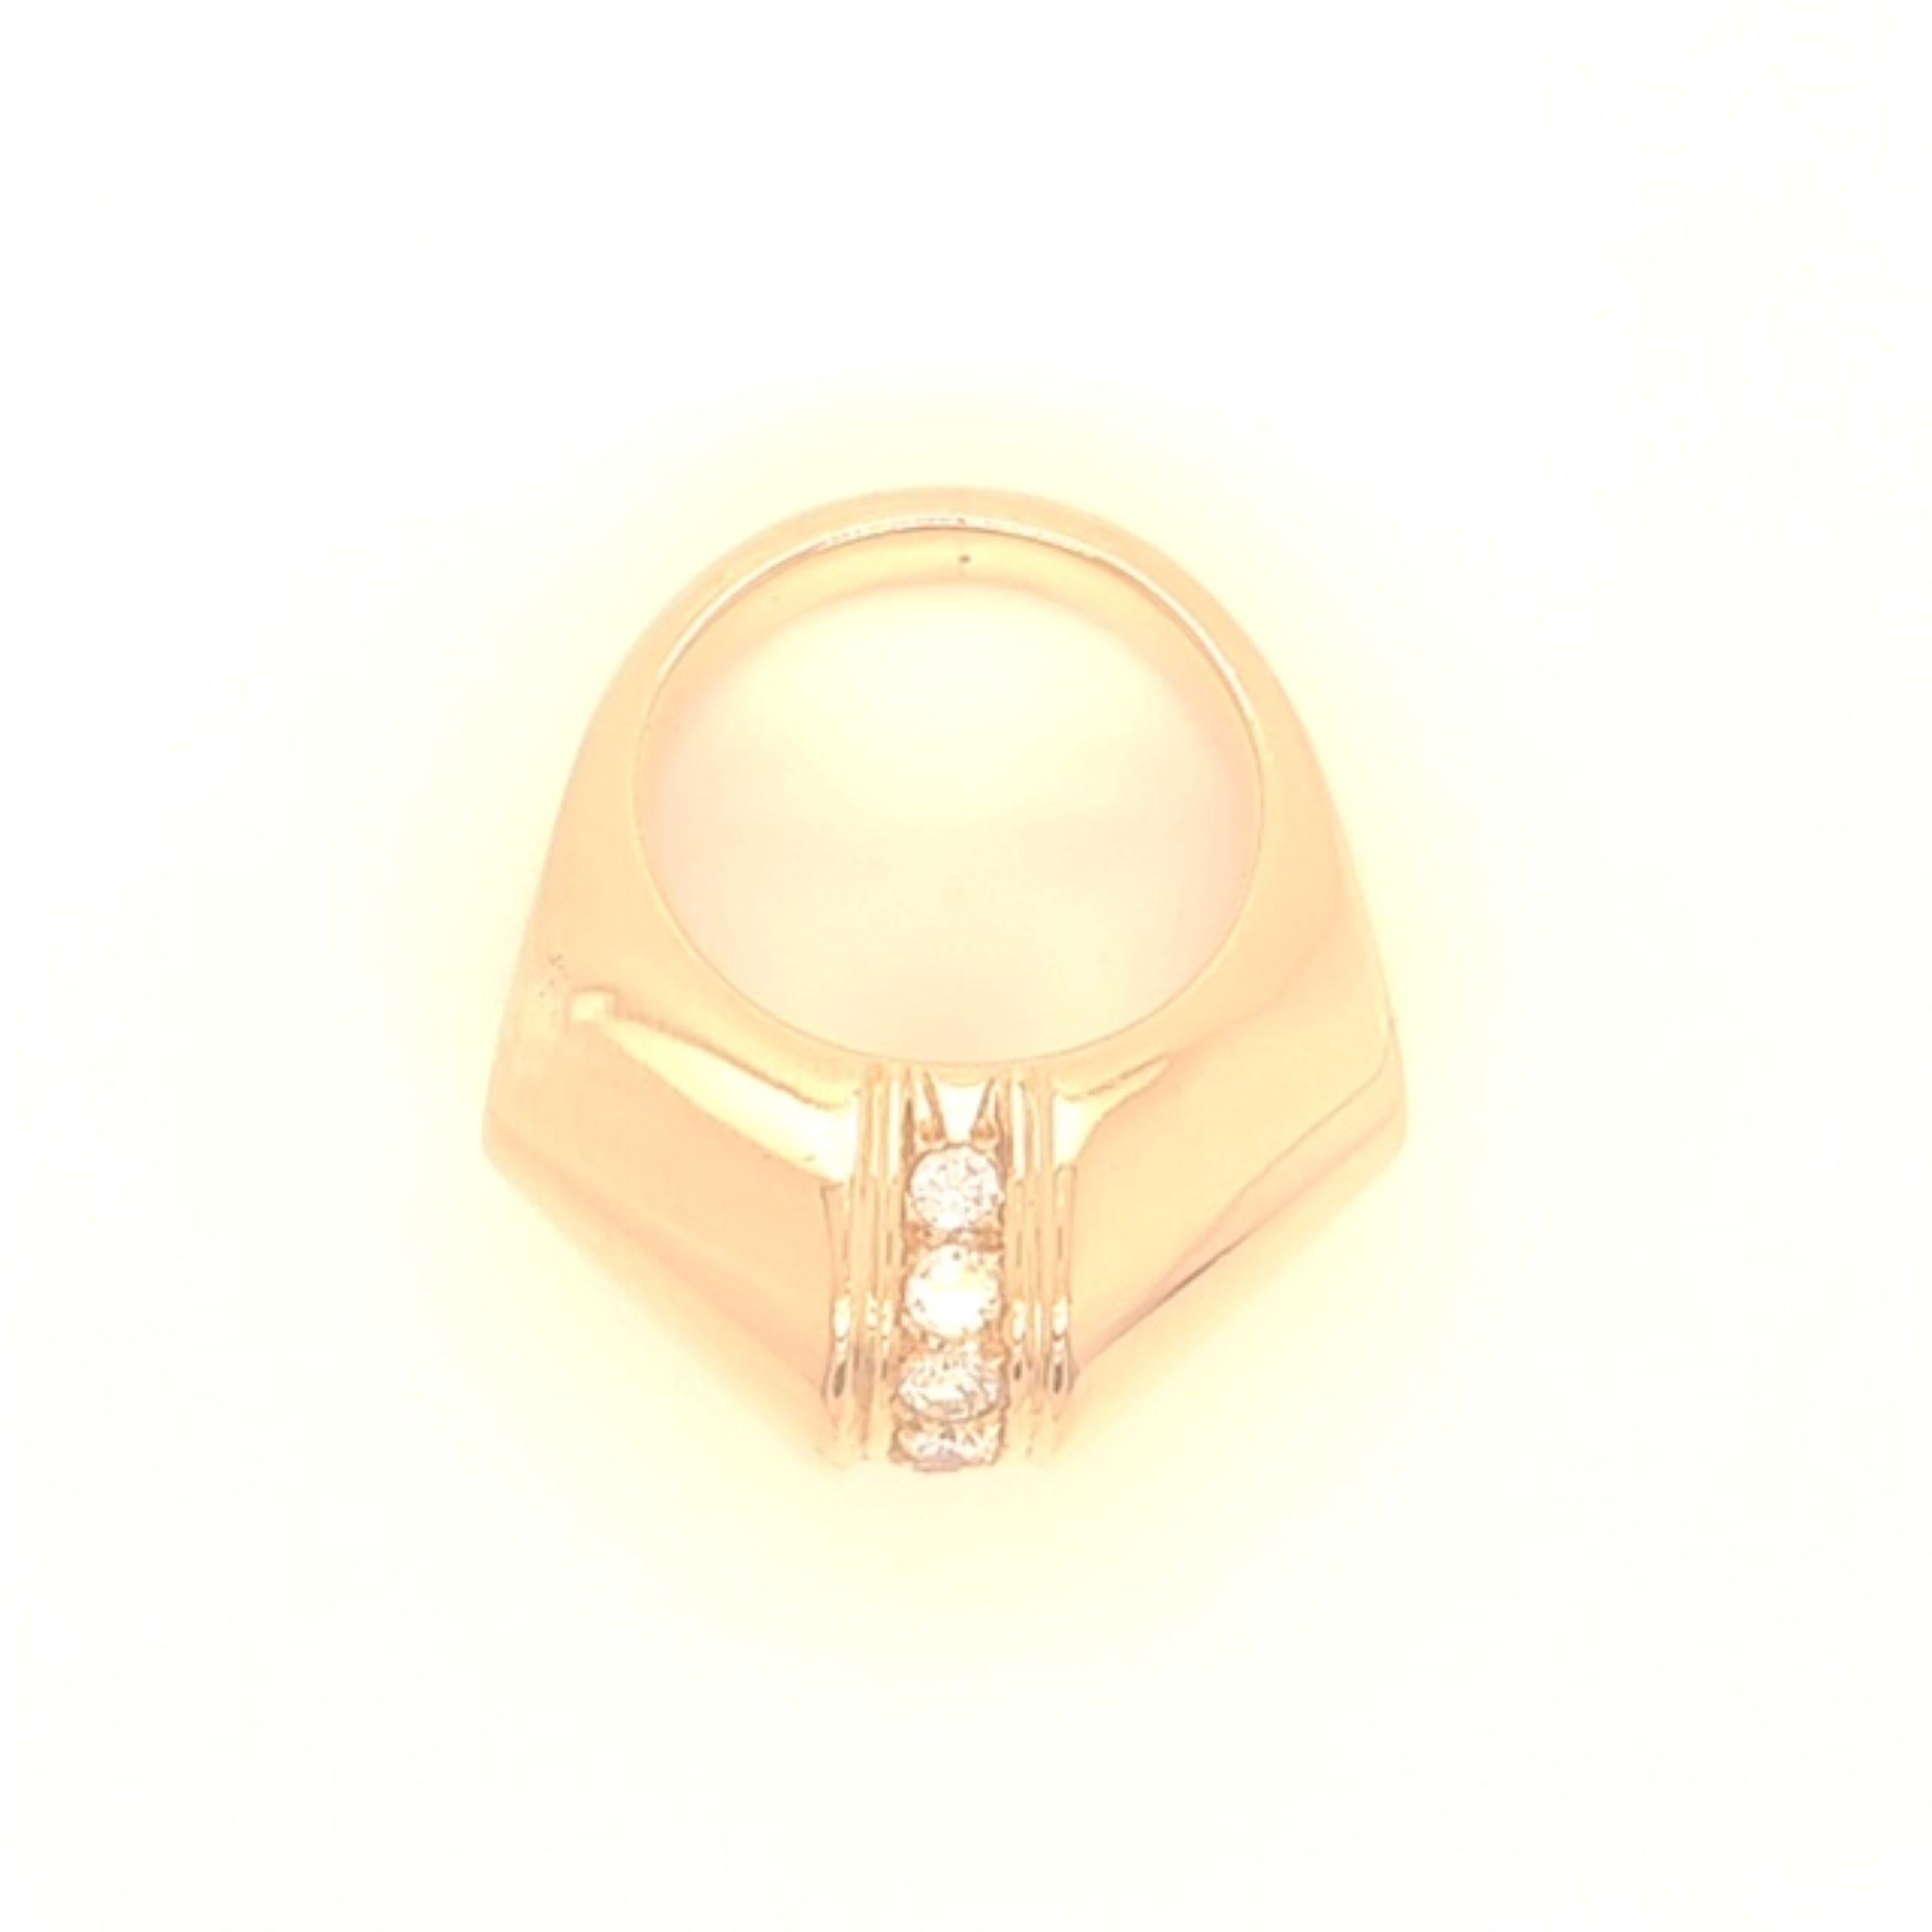 Brilliant Cut A Retro 18ct Rose gold and Diamond Ring Circa 1940s made in Paris.